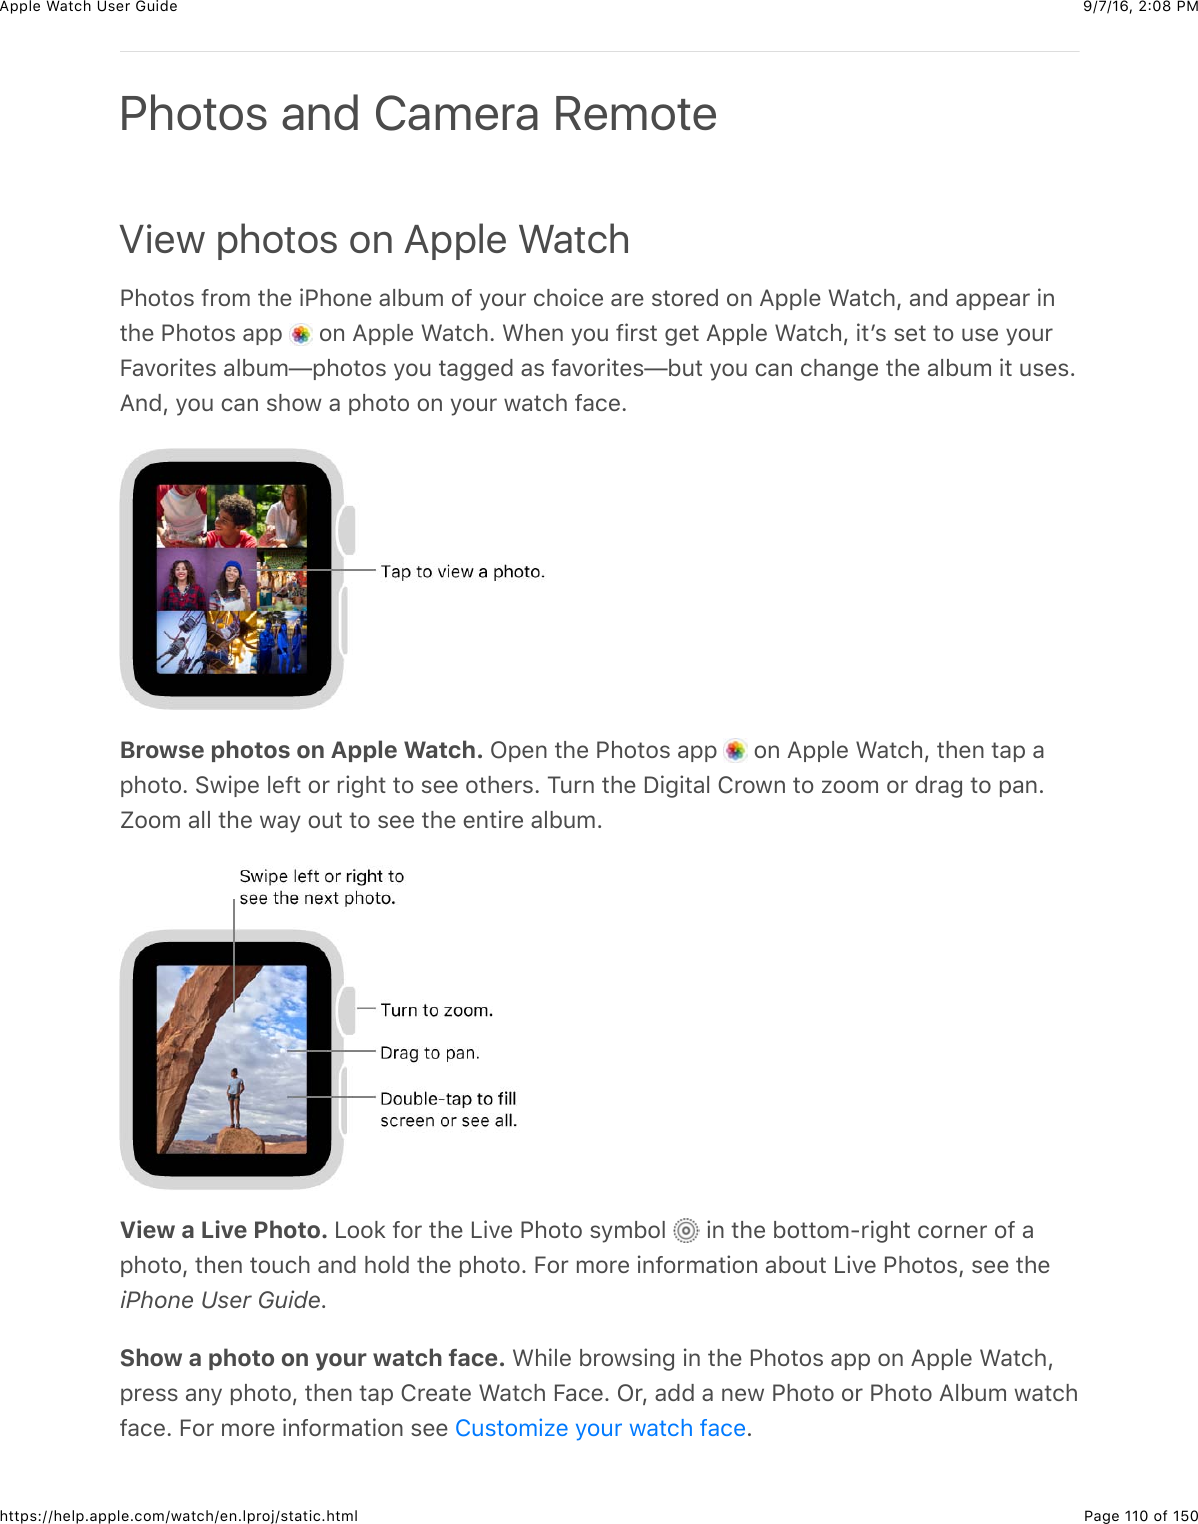 9/7/16, 2)08 PMApple Watch User GuidePage 110 of 150https://help.apple.com/watch/en.lproj/static.htmlView photos on Apple WatchG)#3#$&amp;@*#5&amp;3)%&amp;+G)#,%&amp;&apos;&quot;B45&amp;#@&amp;/#4*&amp;()#+(%&amp;&apos;*%&amp;$3#*%0&amp;#,&amp;=22&quot;%&amp;&gt;&apos;3()J&amp;&apos;,0&amp;&apos;22%&apos;*&amp;+,3)%&amp;G)#3#$&amp;&apos;22&amp; &amp;#,&amp;=22&quot;%&amp;&gt;&apos;3()C&amp;&gt;)%,&amp;/#4&amp;@+*$3&amp;-%3&amp;=22&quot;%&amp;&gt;&apos;3()J&amp;+3W$&amp;$%3&amp;3#&amp;4$%&amp;/#4*E&apos;.#*+3%$&amp;&apos;&quot;B45T2)#3#$&amp;/#4&amp;3&apos;--%0&amp;&apos;$&amp;@&apos;.#*+3%$TB43&amp;/#4&amp;(&apos;,&amp;()&apos;,-%&amp;3)%&amp;&apos;&quot;B45&amp;+3&amp;4$%$C=,0J&amp;/#4&amp;(&apos;,&amp;$)#7&amp;&apos;&amp;2)#3#&amp;#,&amp;/#4*&amp;7&apos;3()&amp;@&apos;(%CBrowse photos on Apple Watch. L2%,&amp;3)%&amp;G)#3#$&amp;&apos;22&amp; &amp;#,&amp;=22&quot;%&amp;&gt;&apos;3()J&amp;3)%,&amp;3&apos;2&amp;&apos;2)#3#C&amp;67+2%&amp;&quot;%@3&amp;#*&amp;*+-)3&amp;3#&amp;$%%&amp;#3)%*$C&amp;14*,&amp;3)%&amp;I+-+3&apos;&quot;&amp;!*#7,&amp;3#&amp;N##5&amp;#*&amp;0*&apos;-&amp;3#&amp;2&apos;,C`##5&amp;&apos;&quot;&quot;&amp;3)%&amp;7&apos;/&amp;#43&amp;3#&amp;$%%&amp;3)%&amp;%,3+*%&amp;&apos;&quot;B45CView a Live Photo. &lt;##8&amp;@#*&amp;3)%&amp;&lt;+.%&amp;G)#3#&amp;$/5B#&quot;&amp; &amp;+,&amp;3)%&amp;B#33#5?*+-)3&amp;(#*,%*&amp;#@&amp;&apos;2)#3#J&amp;3)%,&amp;3#4()&amp;&apos;,0&amp;)#&quot;0&amp;3)%&amp;2)#3#C&amp;E#*&amp;5#*%&amp;+,@#*5&apos;3+#,&amp;&apos;B#43&amp;&lt;+.%&amp;G)#3#$J&amp;$%%&amp;3)%iPhone User GuideCShow a photo on your watch face. &gt;)+&quot;%&amp;B*#7$+,-&amp;+,&amp;3)%&amp;G)#3#$&amp;&apos;22&amp;#,&amp;=22&quot;%&amp;&gt;&apos;3()J2*%$$&amp;&apos;,/&amp;2)#3#J&amp;3)%,&amp;3&apos;2&amp;!*%&apos;3%&amp;&gt;&apos;3()&amp;E&apos;(%C&amp;L*J&amp;&apos;00&amp;&apos;&amp;,%7&amp;G)#3#&amp;#*&amp;G)#3#&amp;=&quot;B45&amp;7&apos;3()@&apos;(%C&amp;E#*&amp;5#*%&amp;+,@#*5&apos;3+#,&amp;$%%&amp; CPhotos and Camera Remote!4$3#5+N%&amp;/#4*&amp;7&apos;3()&amp;@&apos;(%